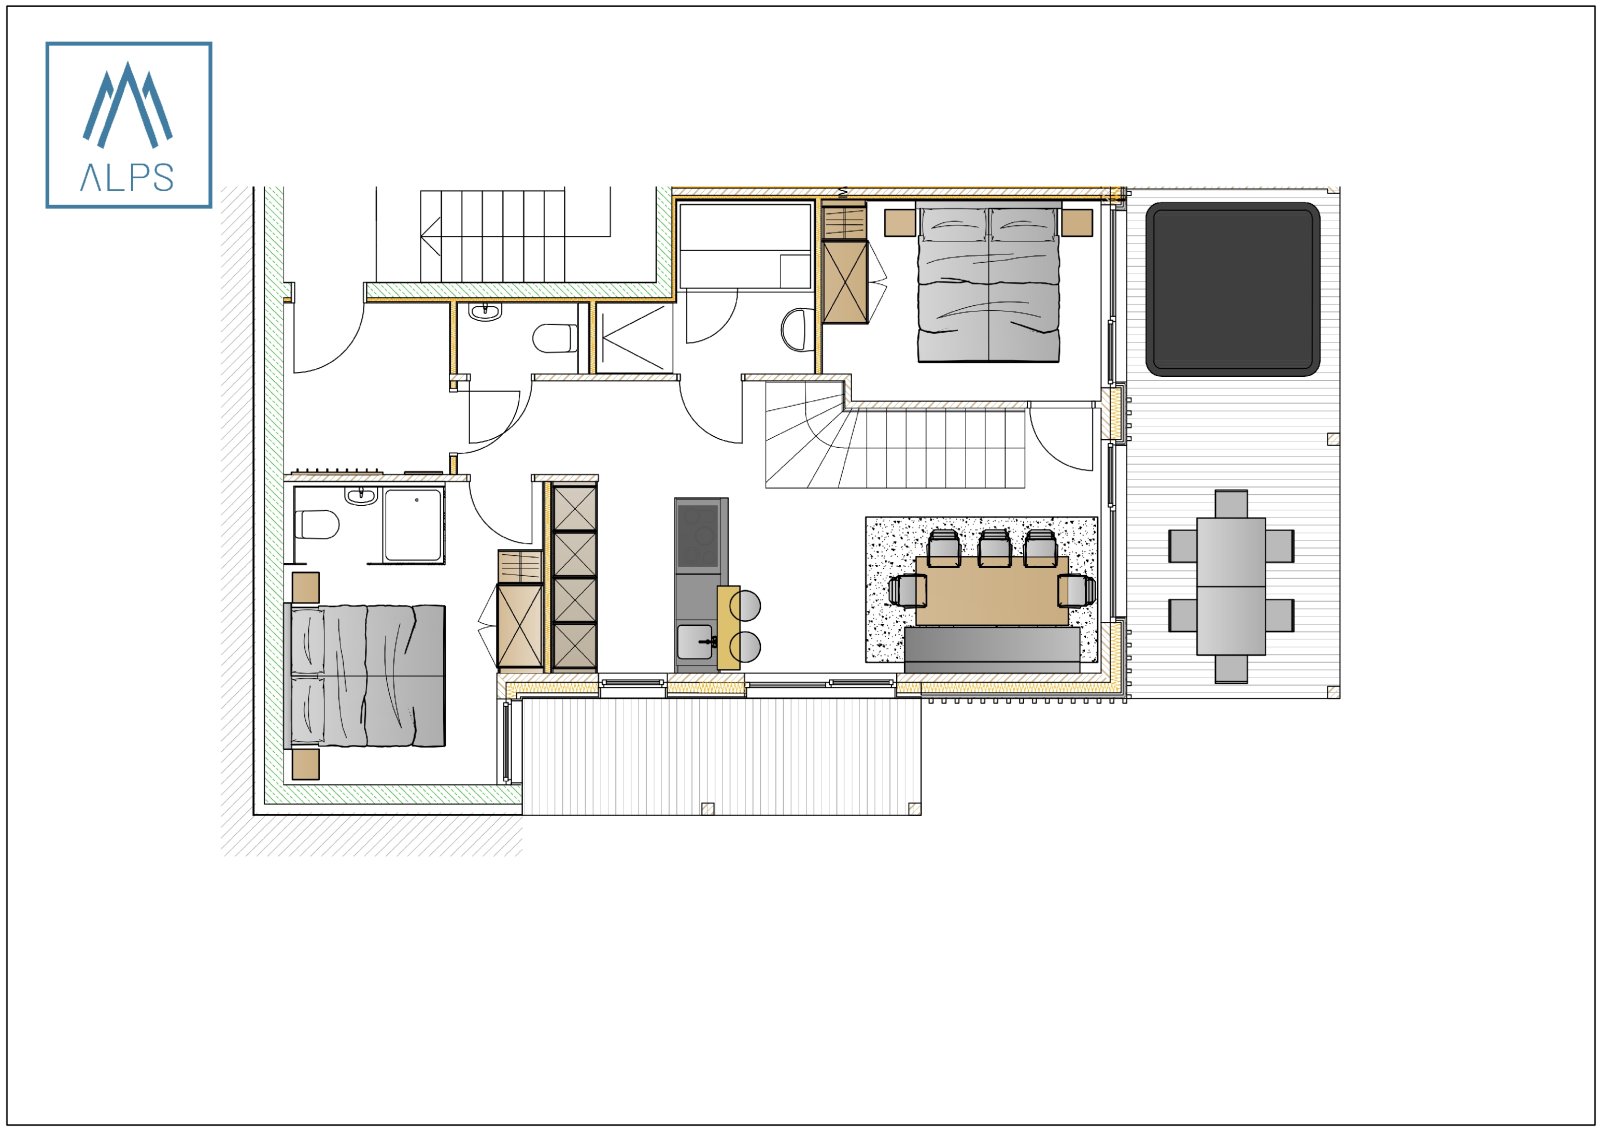 Planai apartman - galériás - 95 m2 / 4 fős - földszinti alaprajz